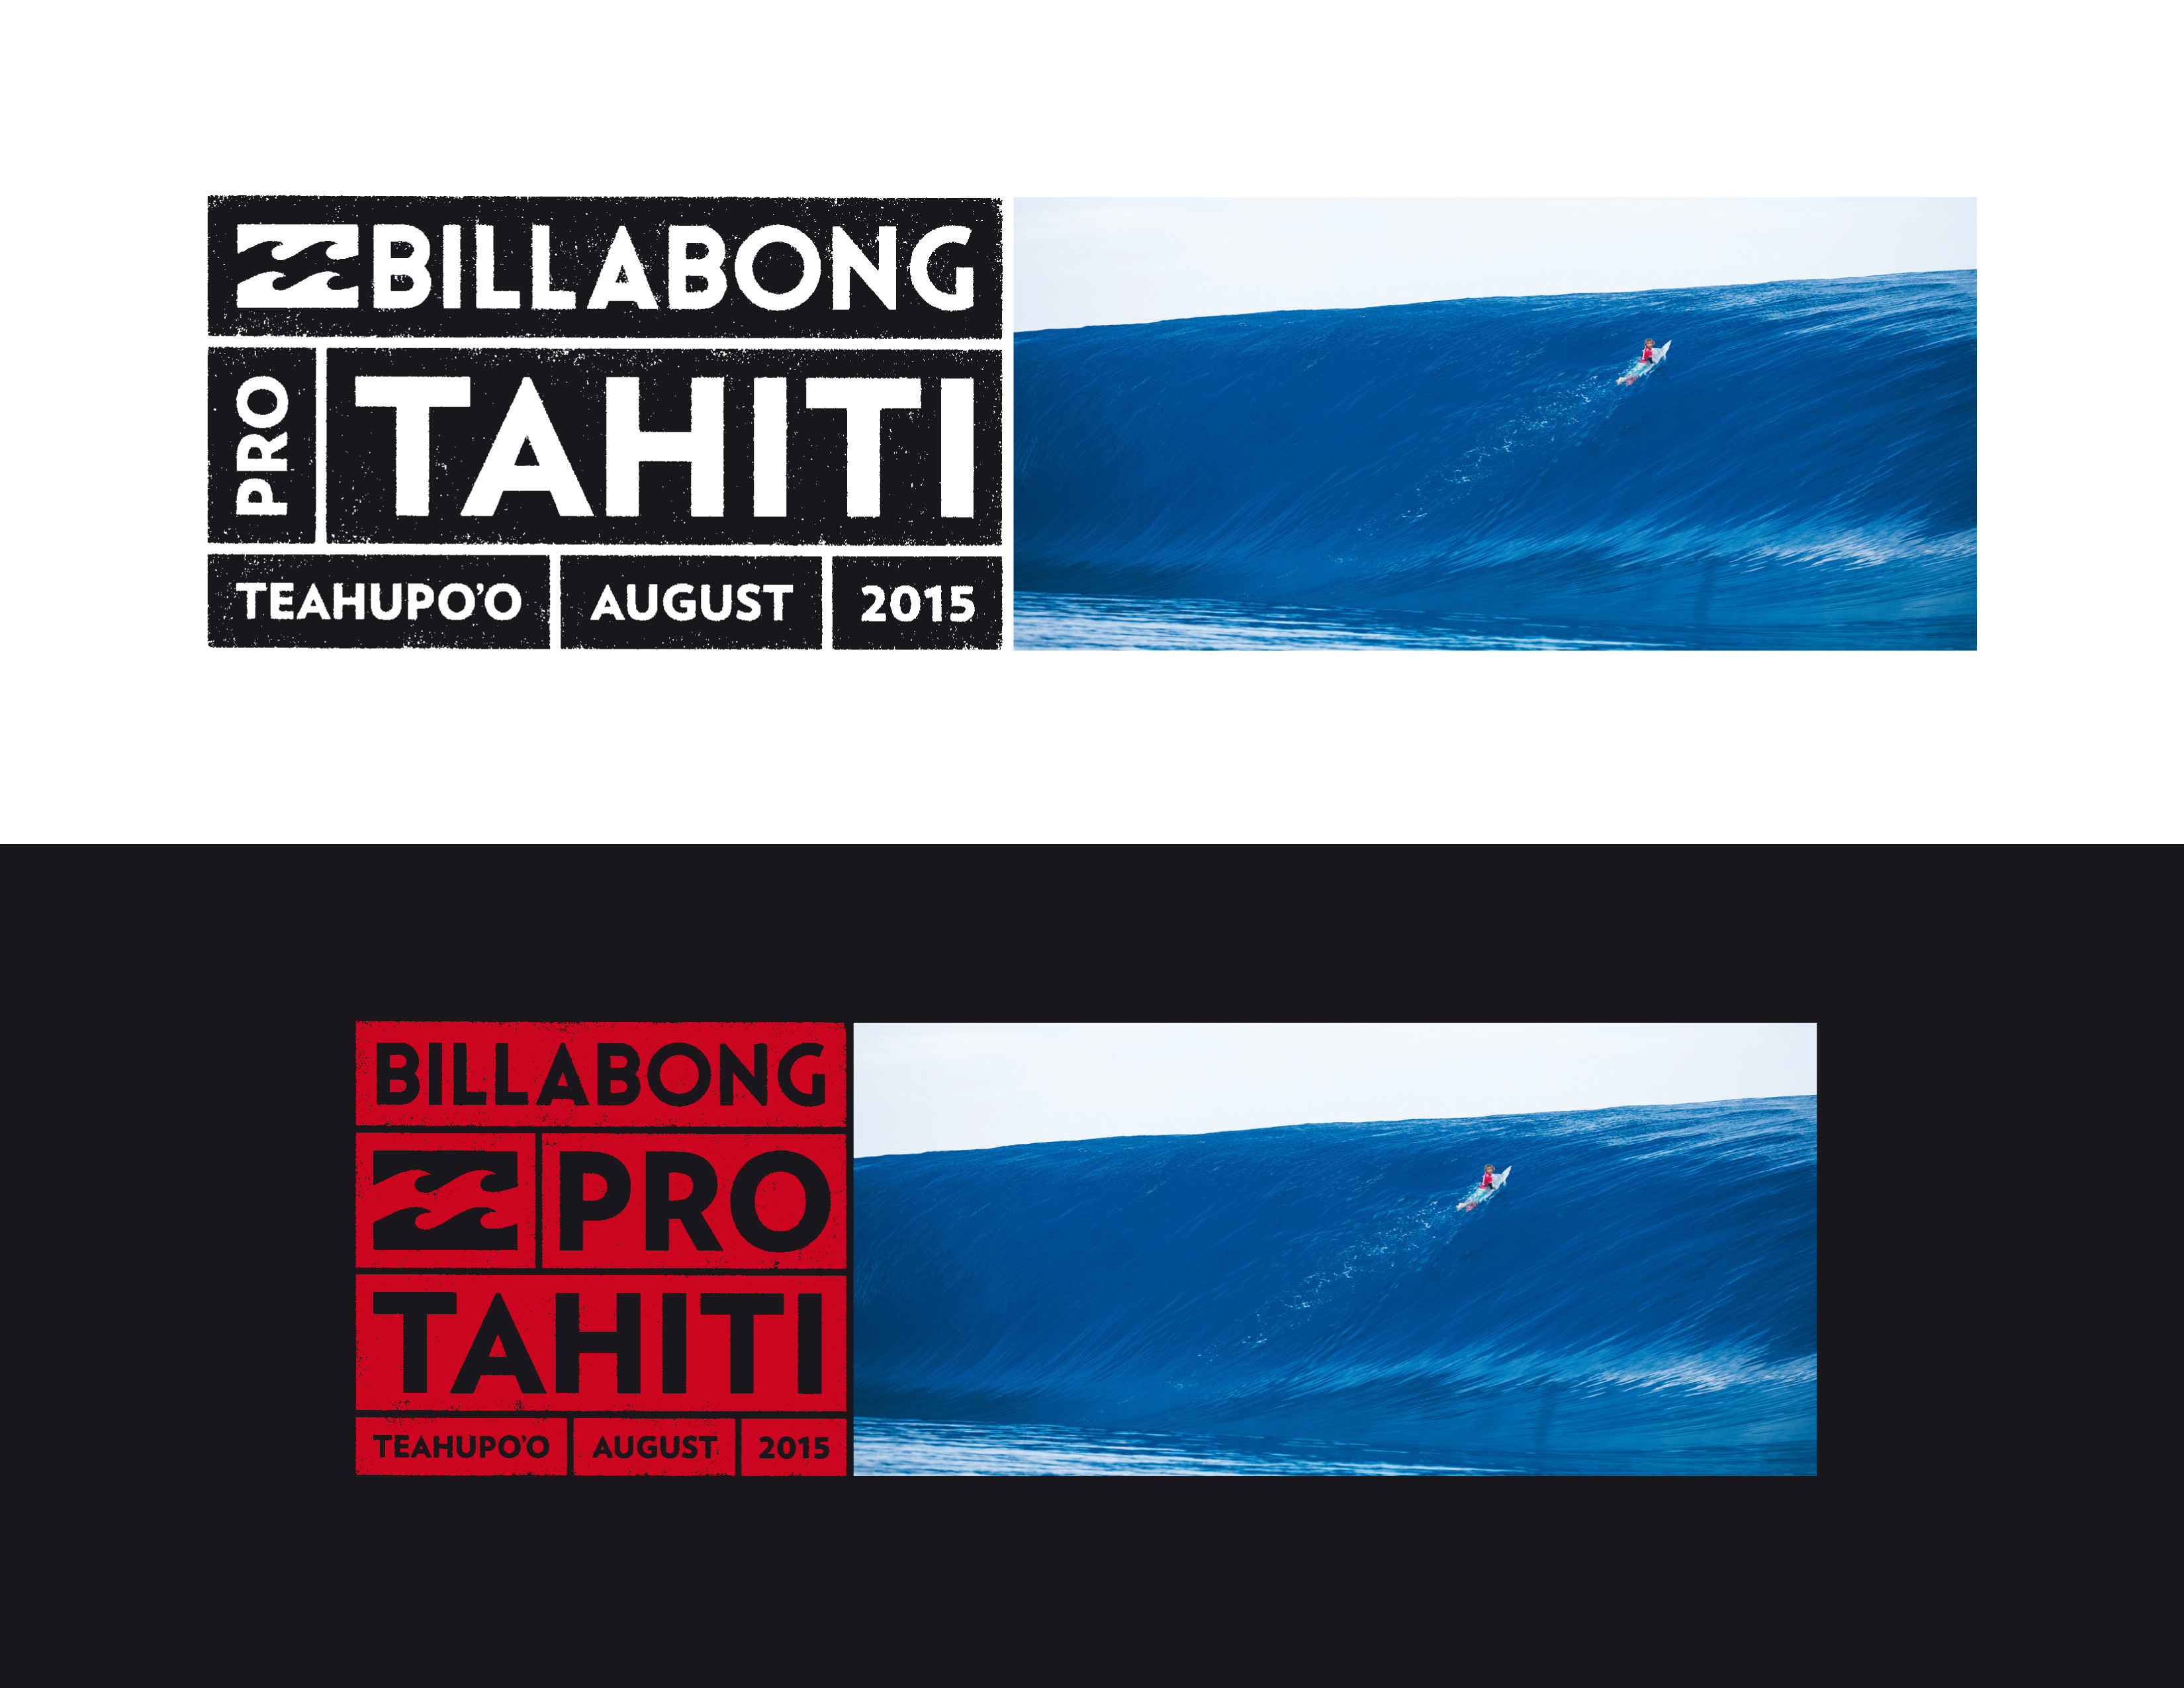 Billabong Pro Tahiti 2015 : les jeux sont ouverts ce matin